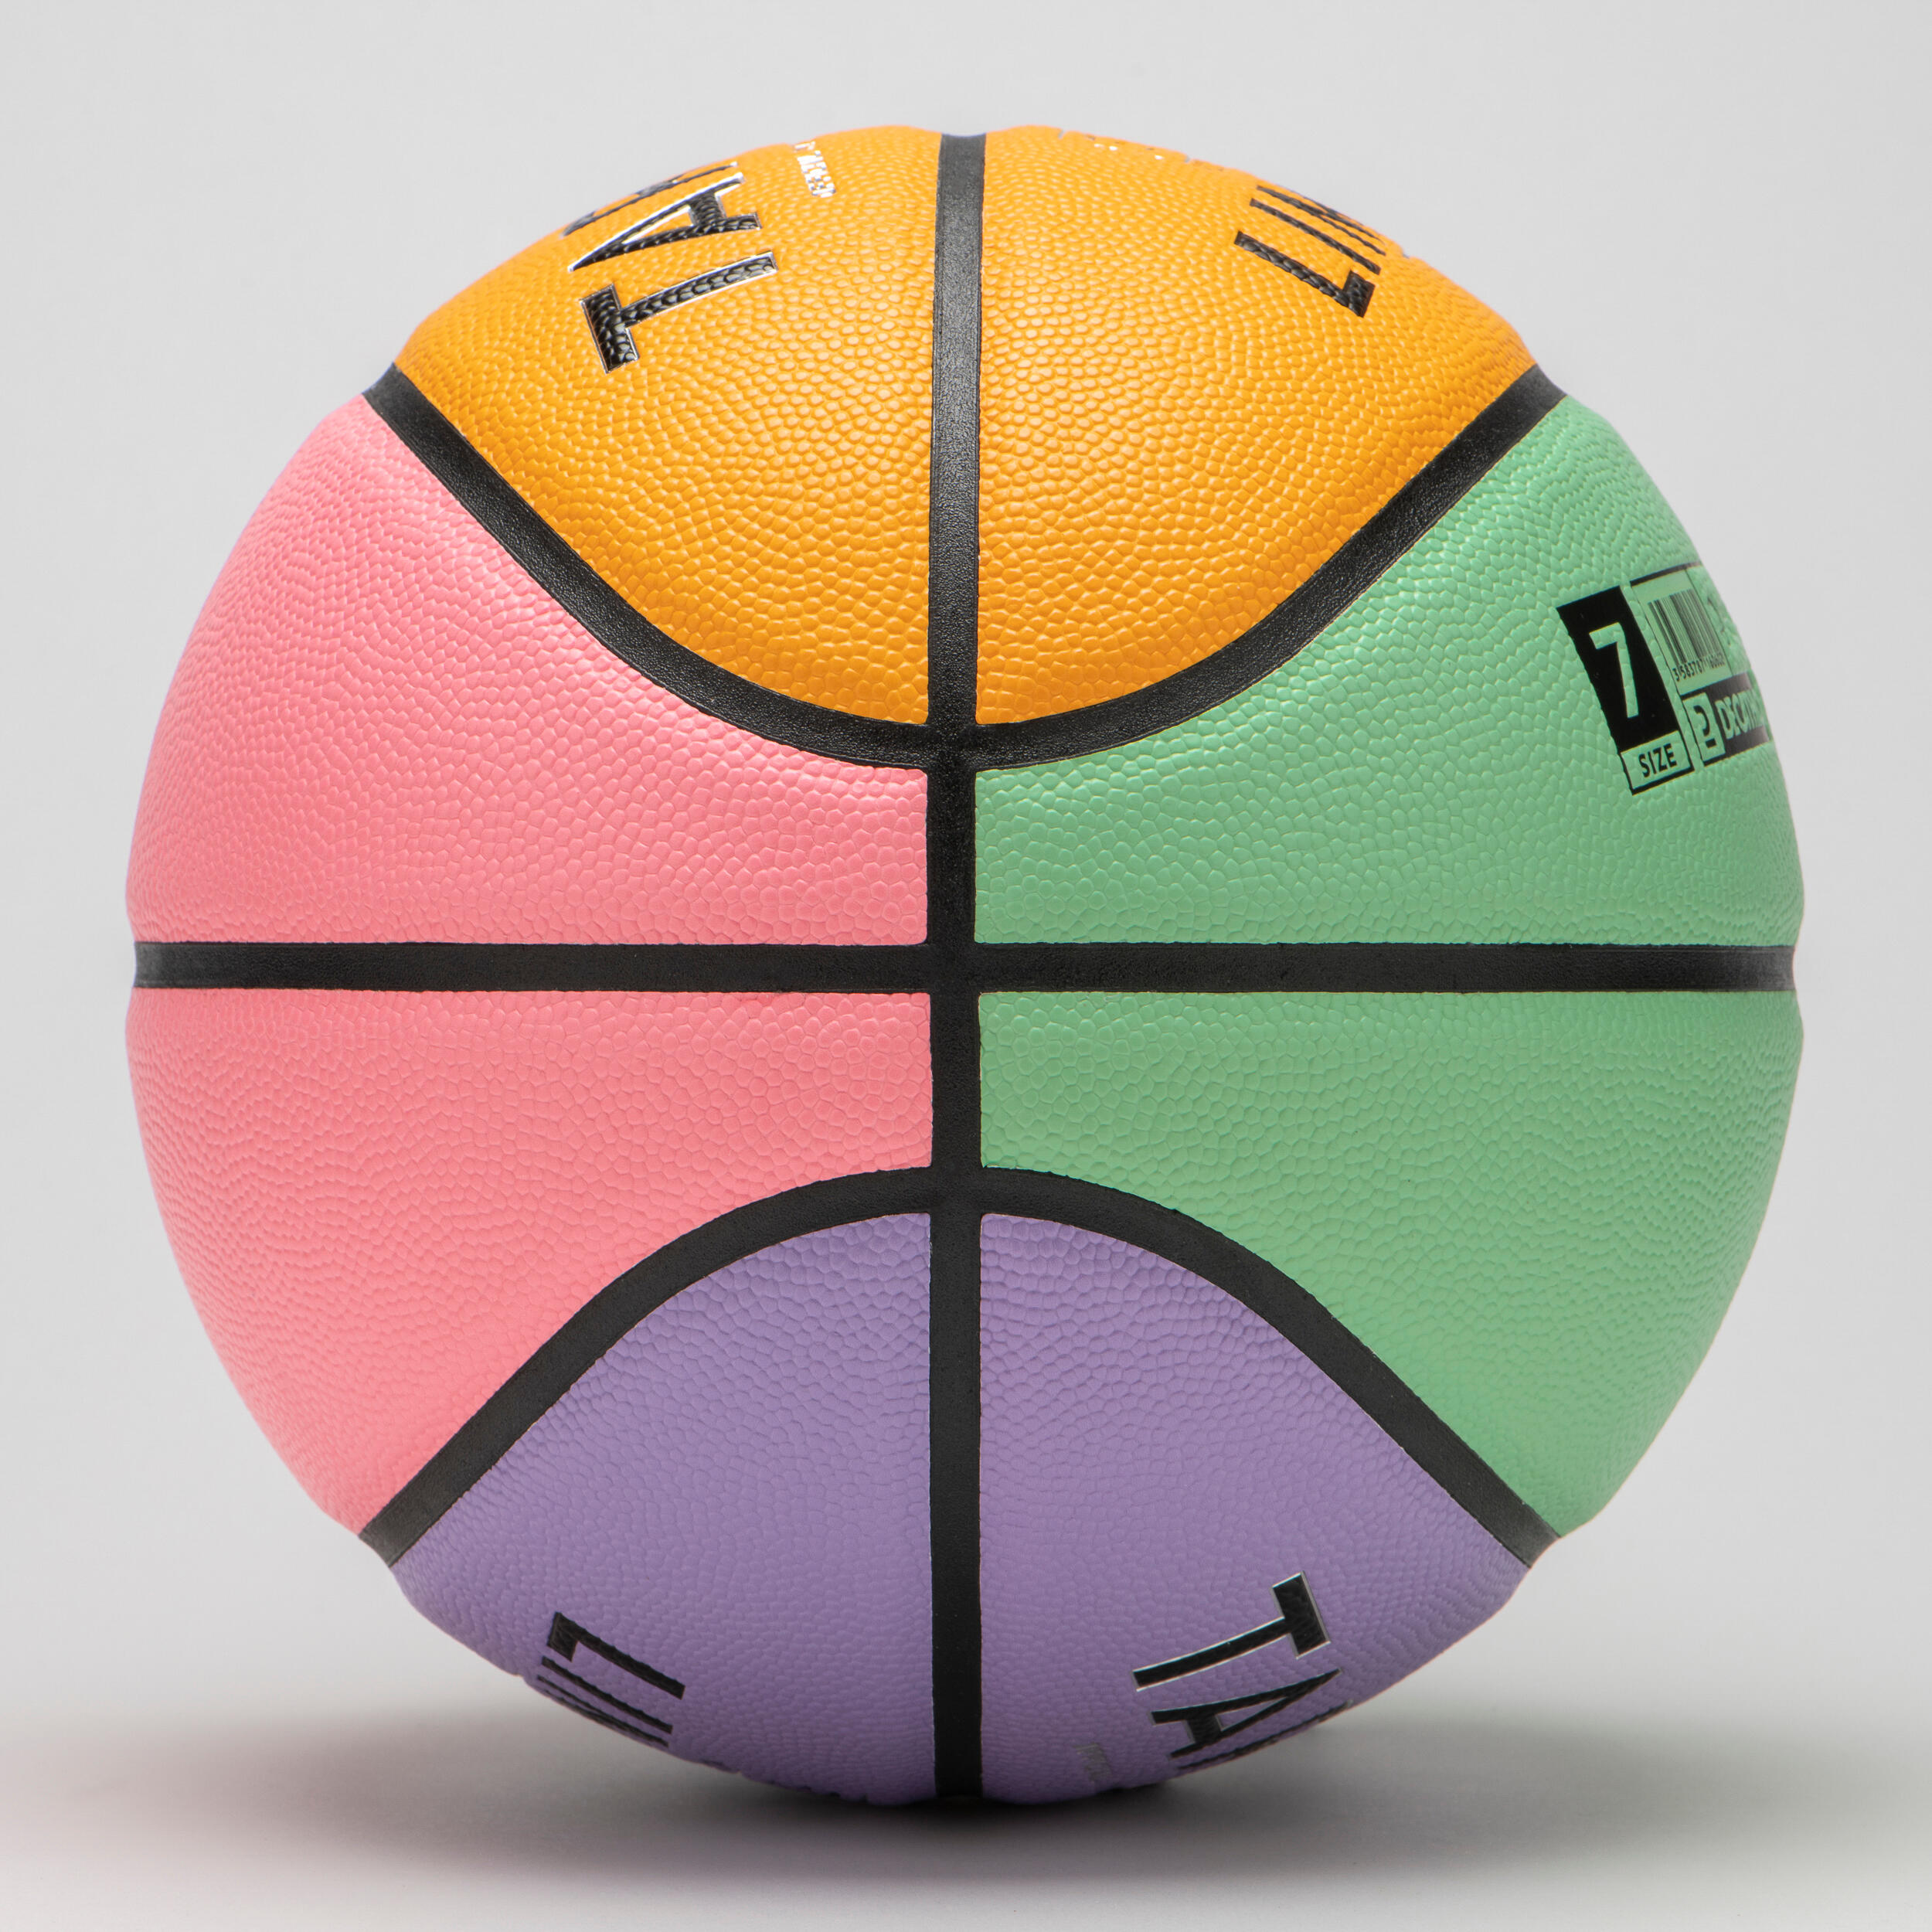 Size 7 Basketball BT500 Touch - Purple/Green 3/7